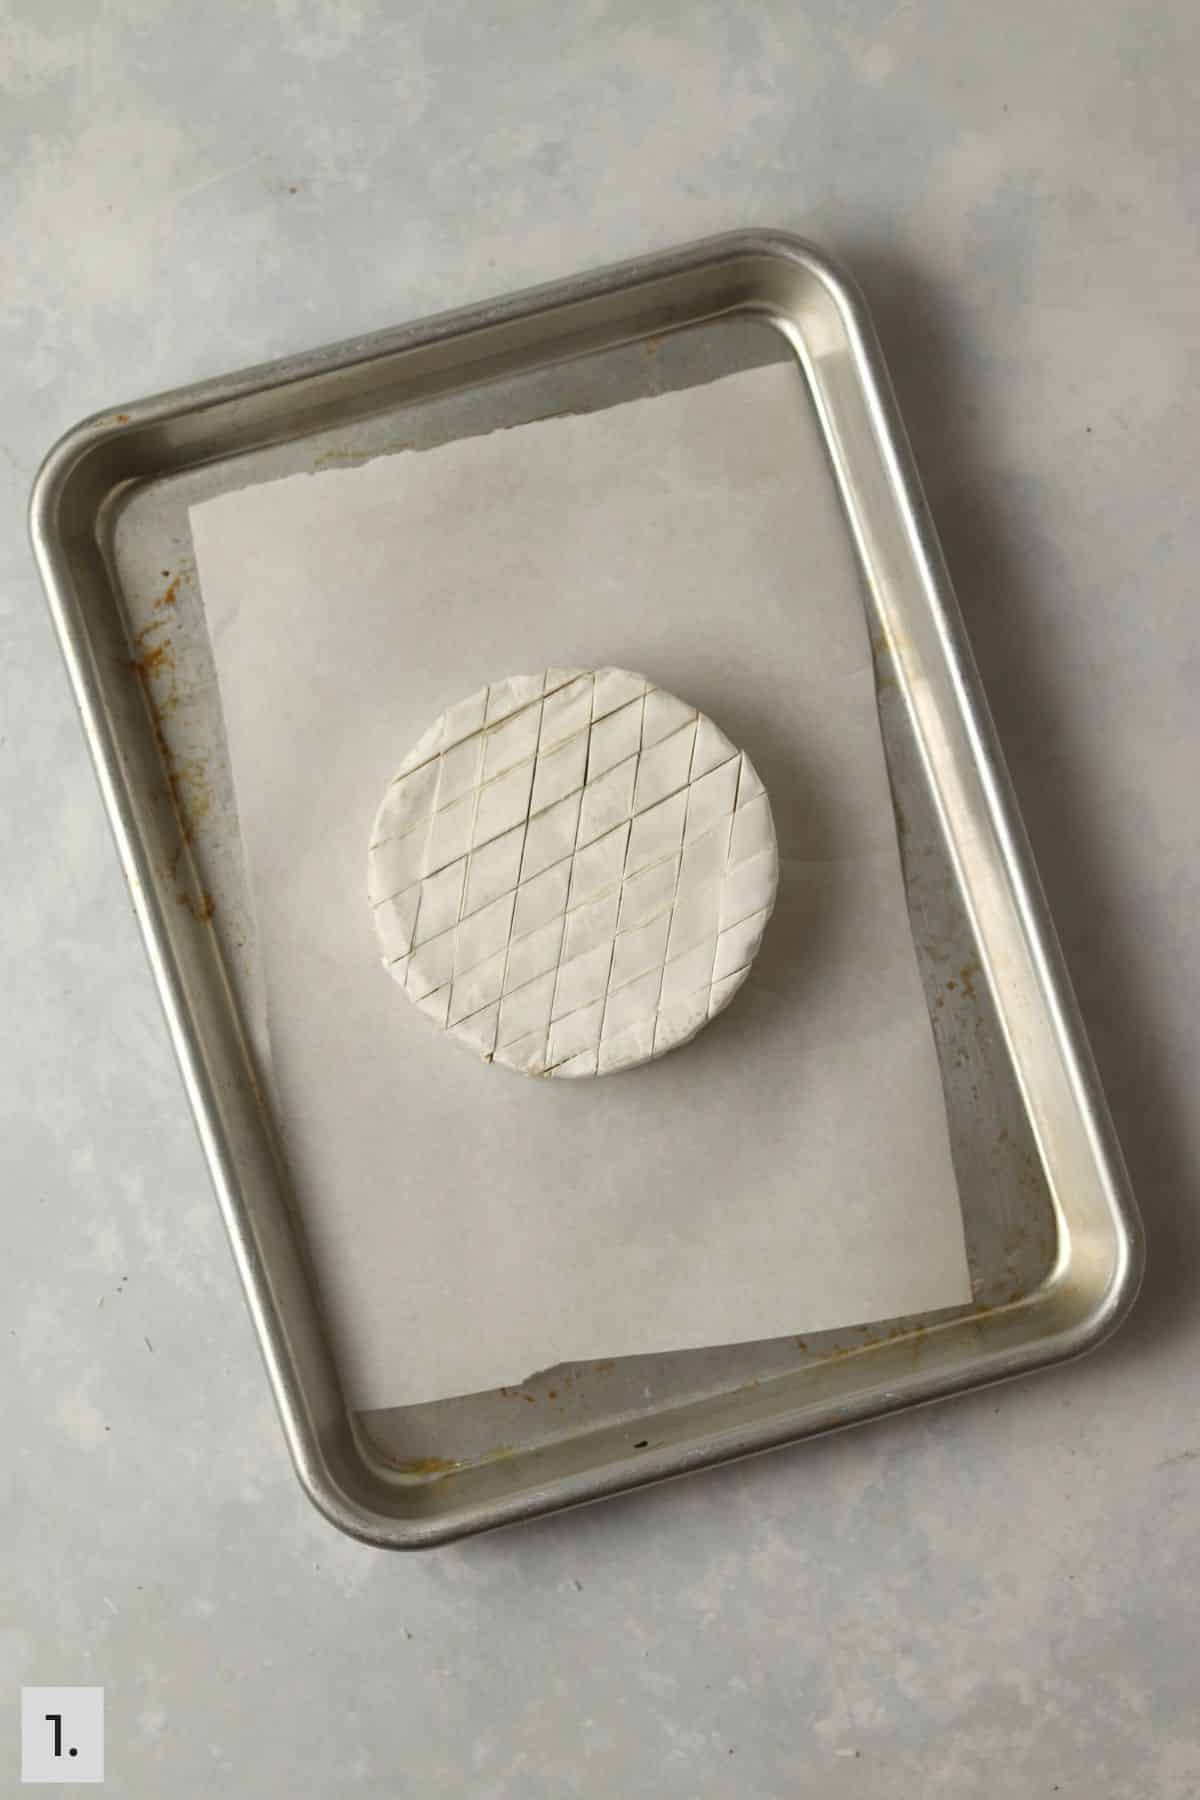 Brie round on baking sheet.